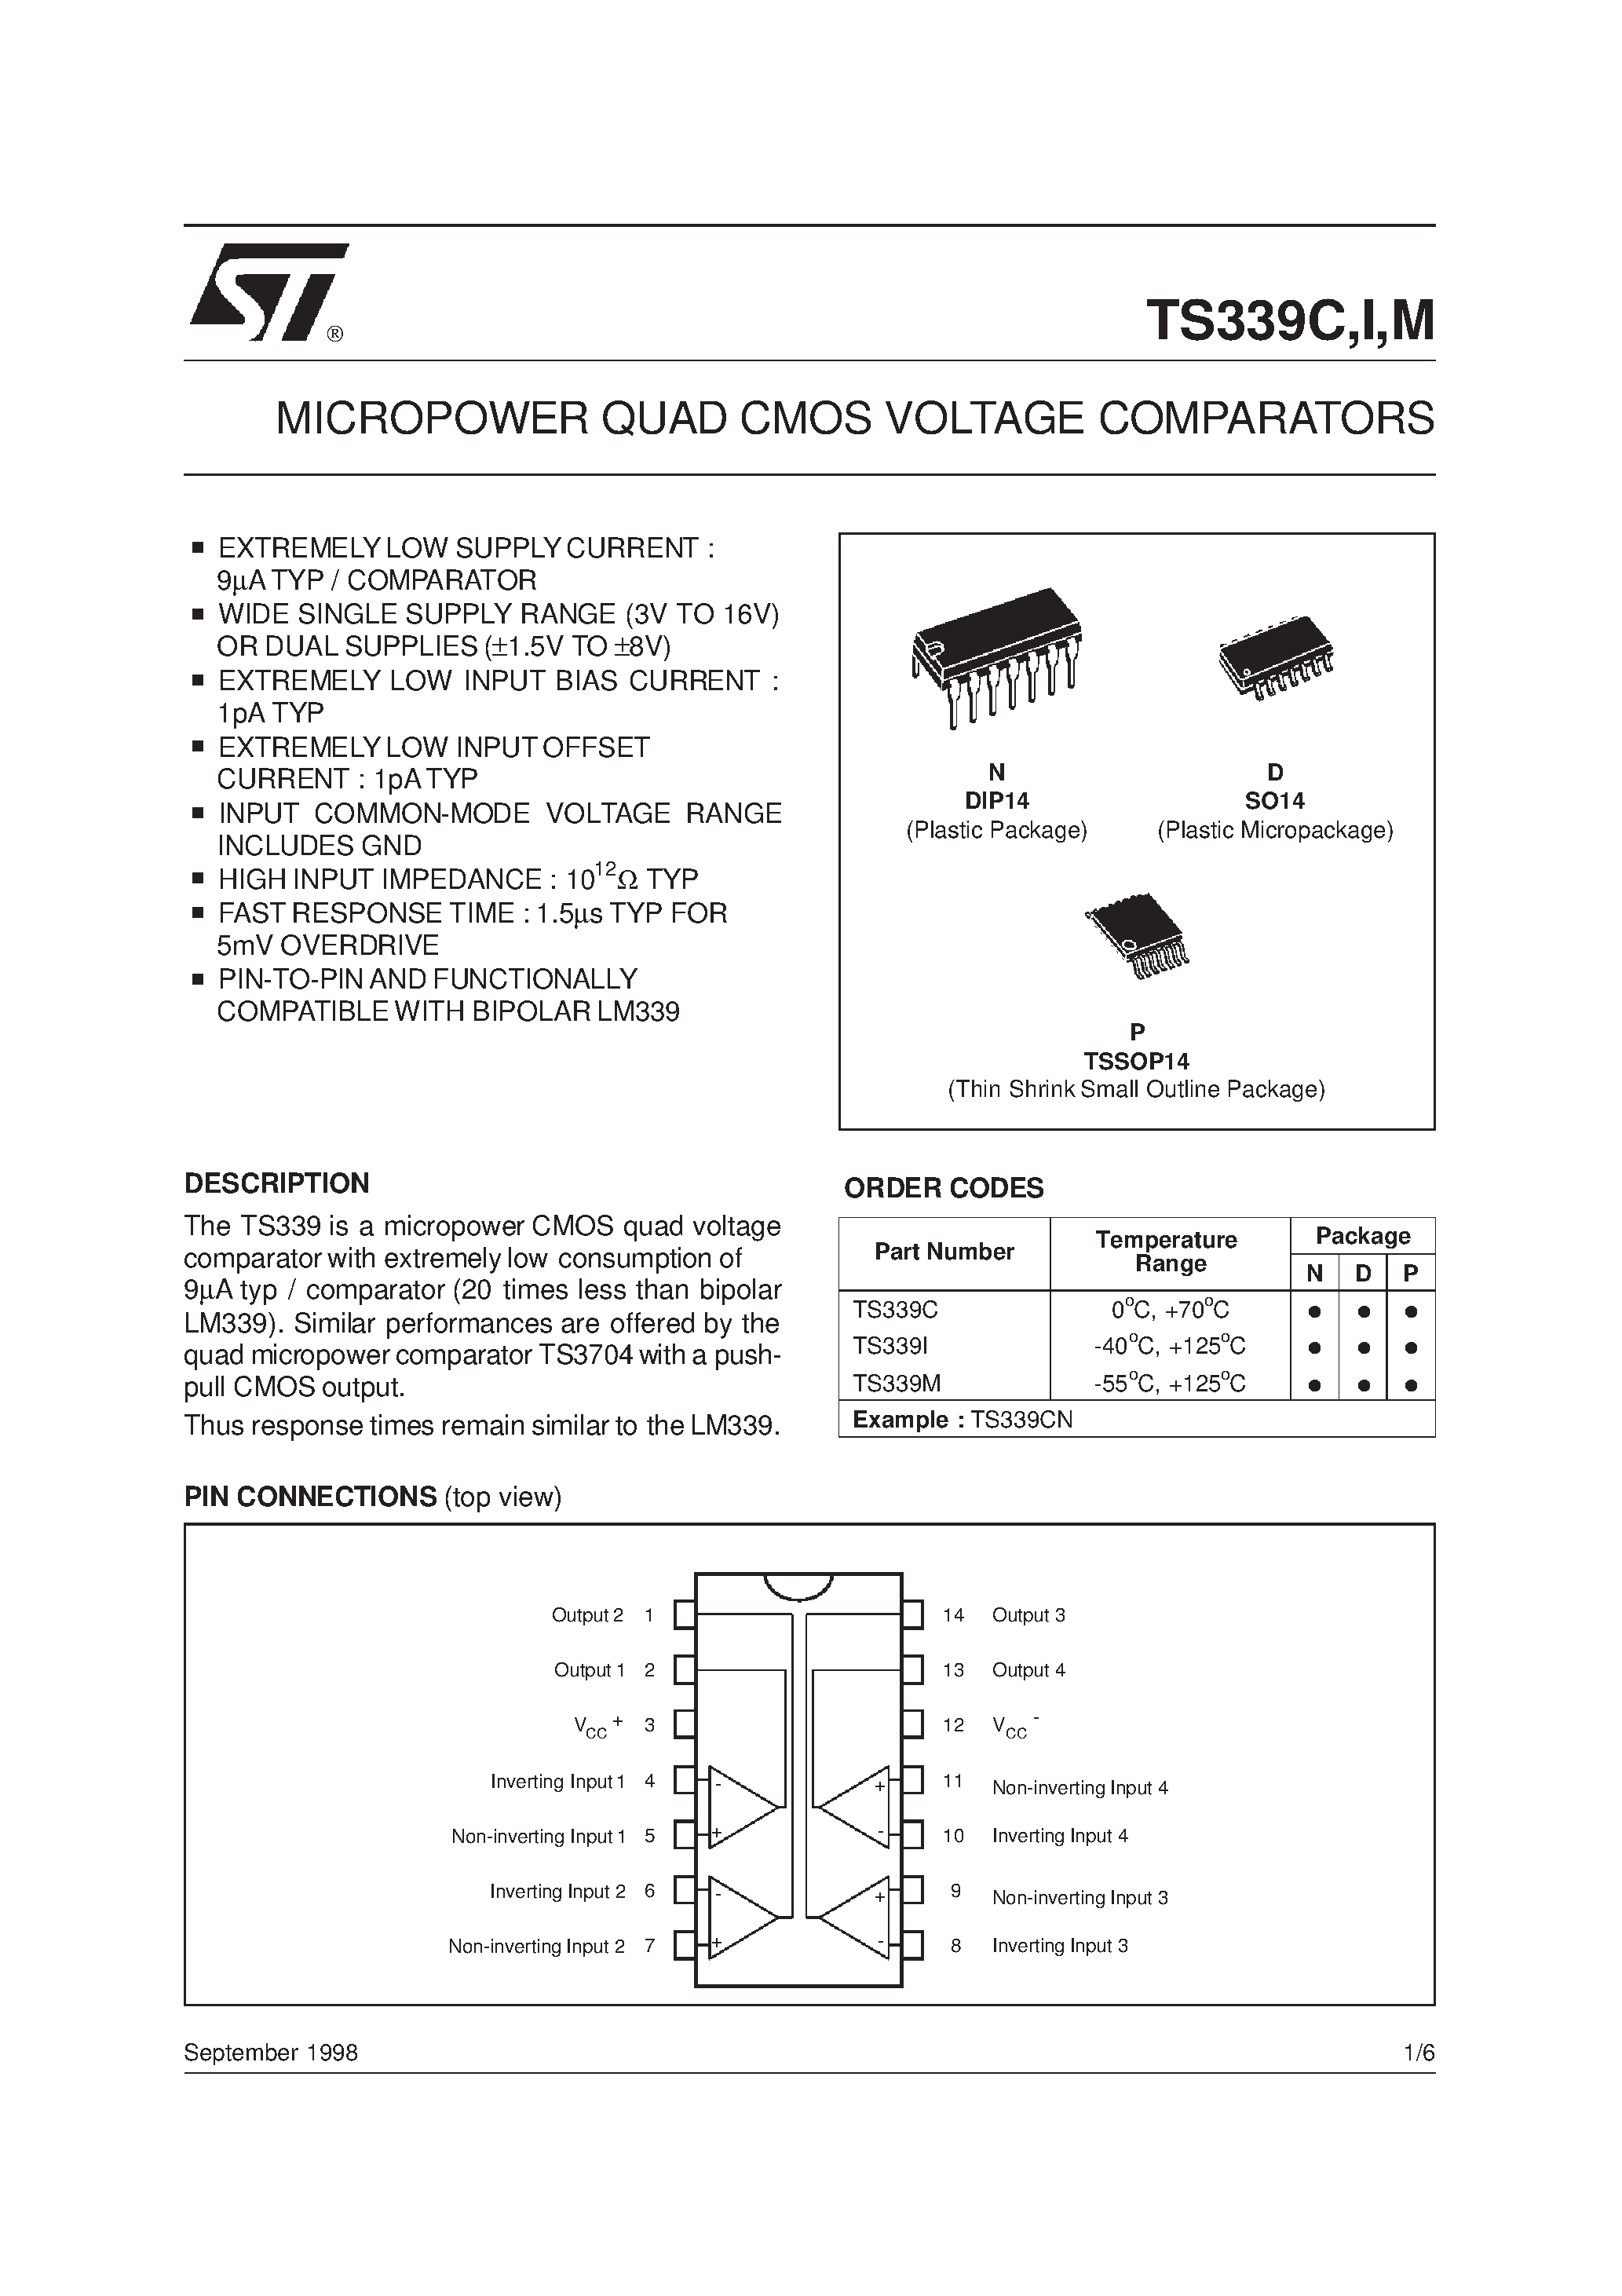 Datasheet TS339C - MICROPOWER QUAD CMOS VOLTAGE COMPARATORS page 1